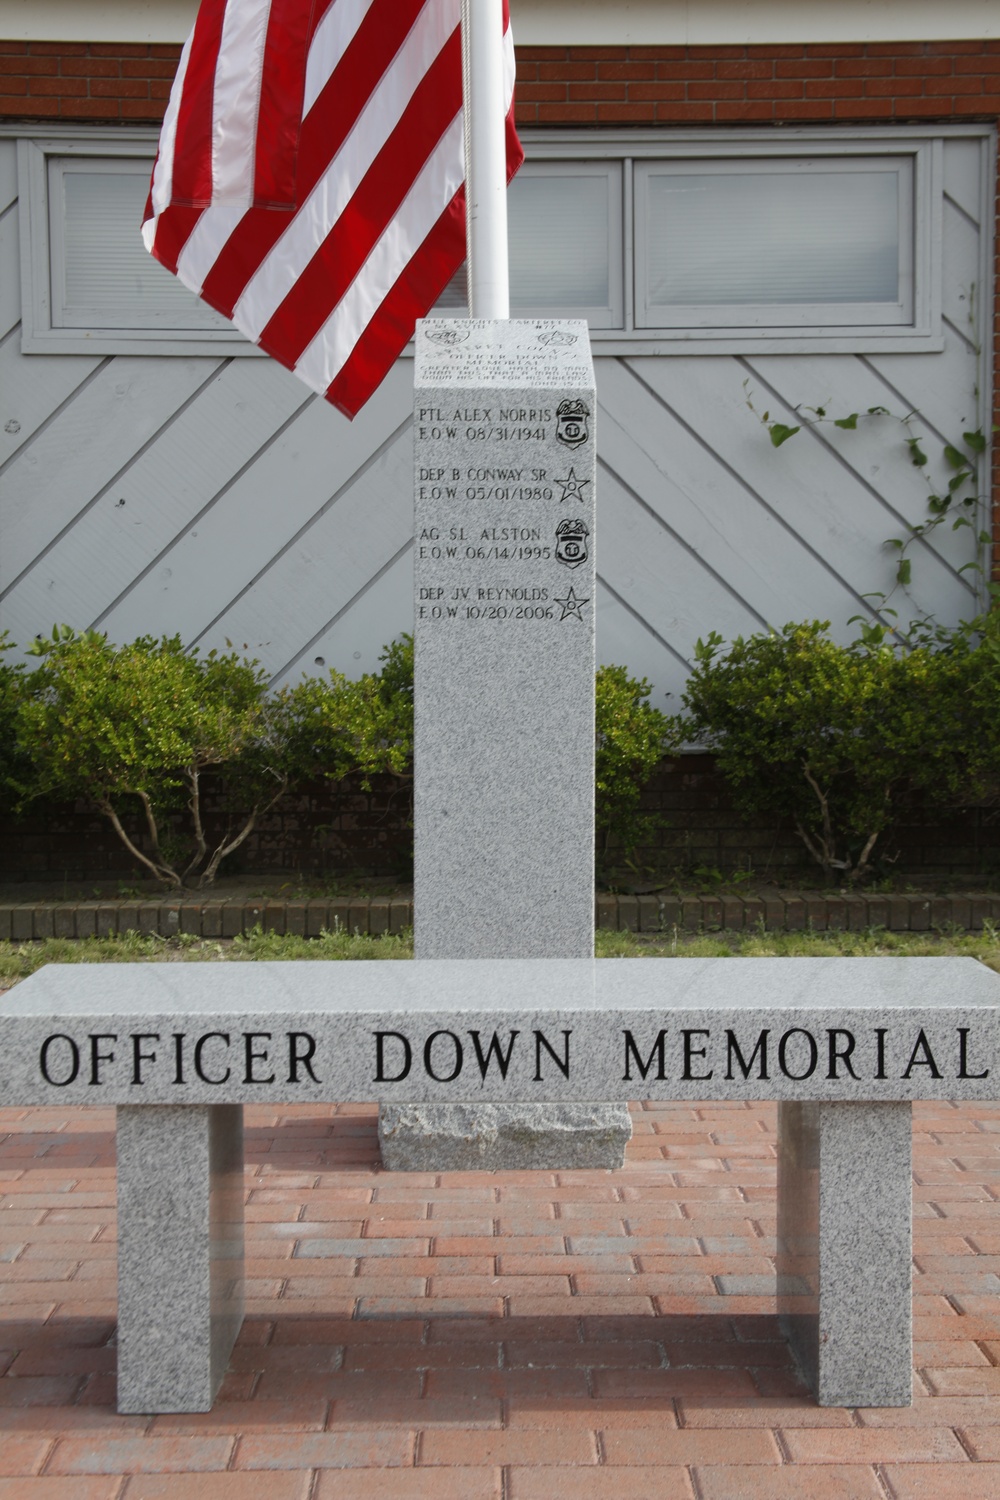 Community law enforcement honors fallen heroes